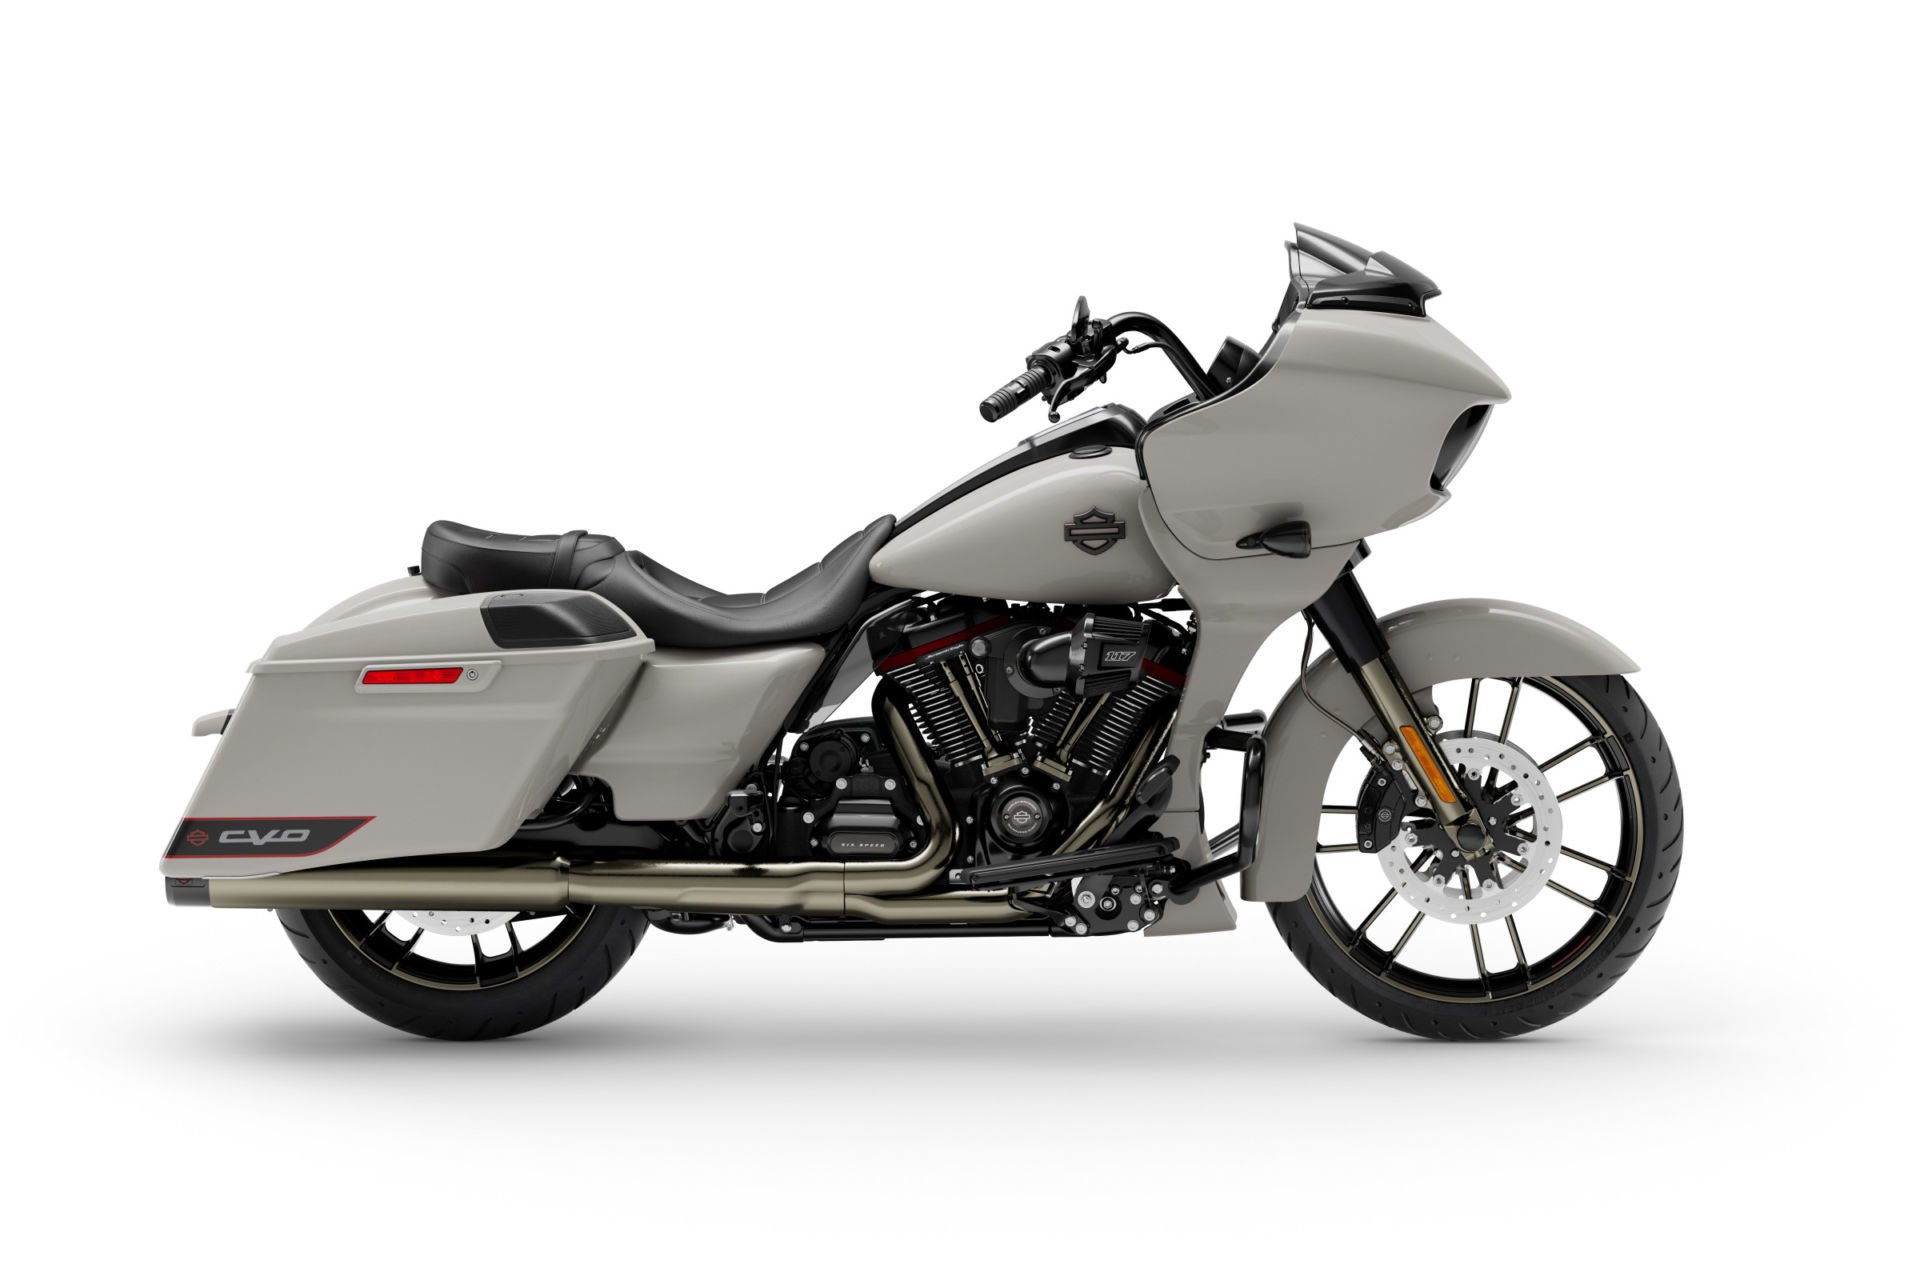 Harley Davidson Limited Edition Cvo 2020 Price Promotion Off63